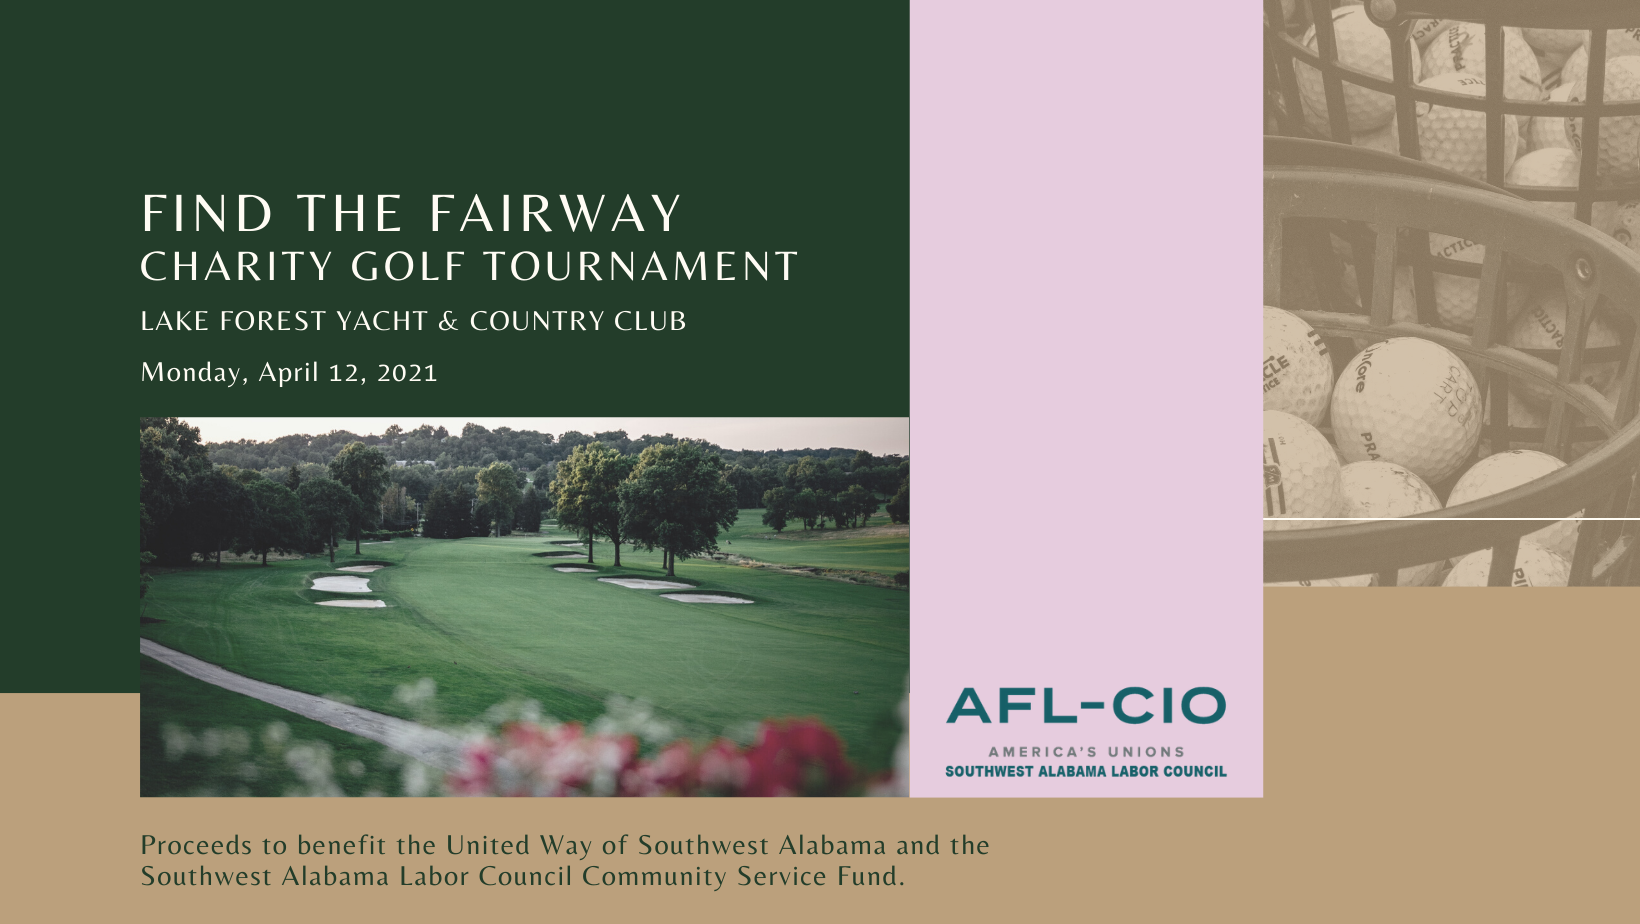 Find the Fairway Charity Golf Tournament